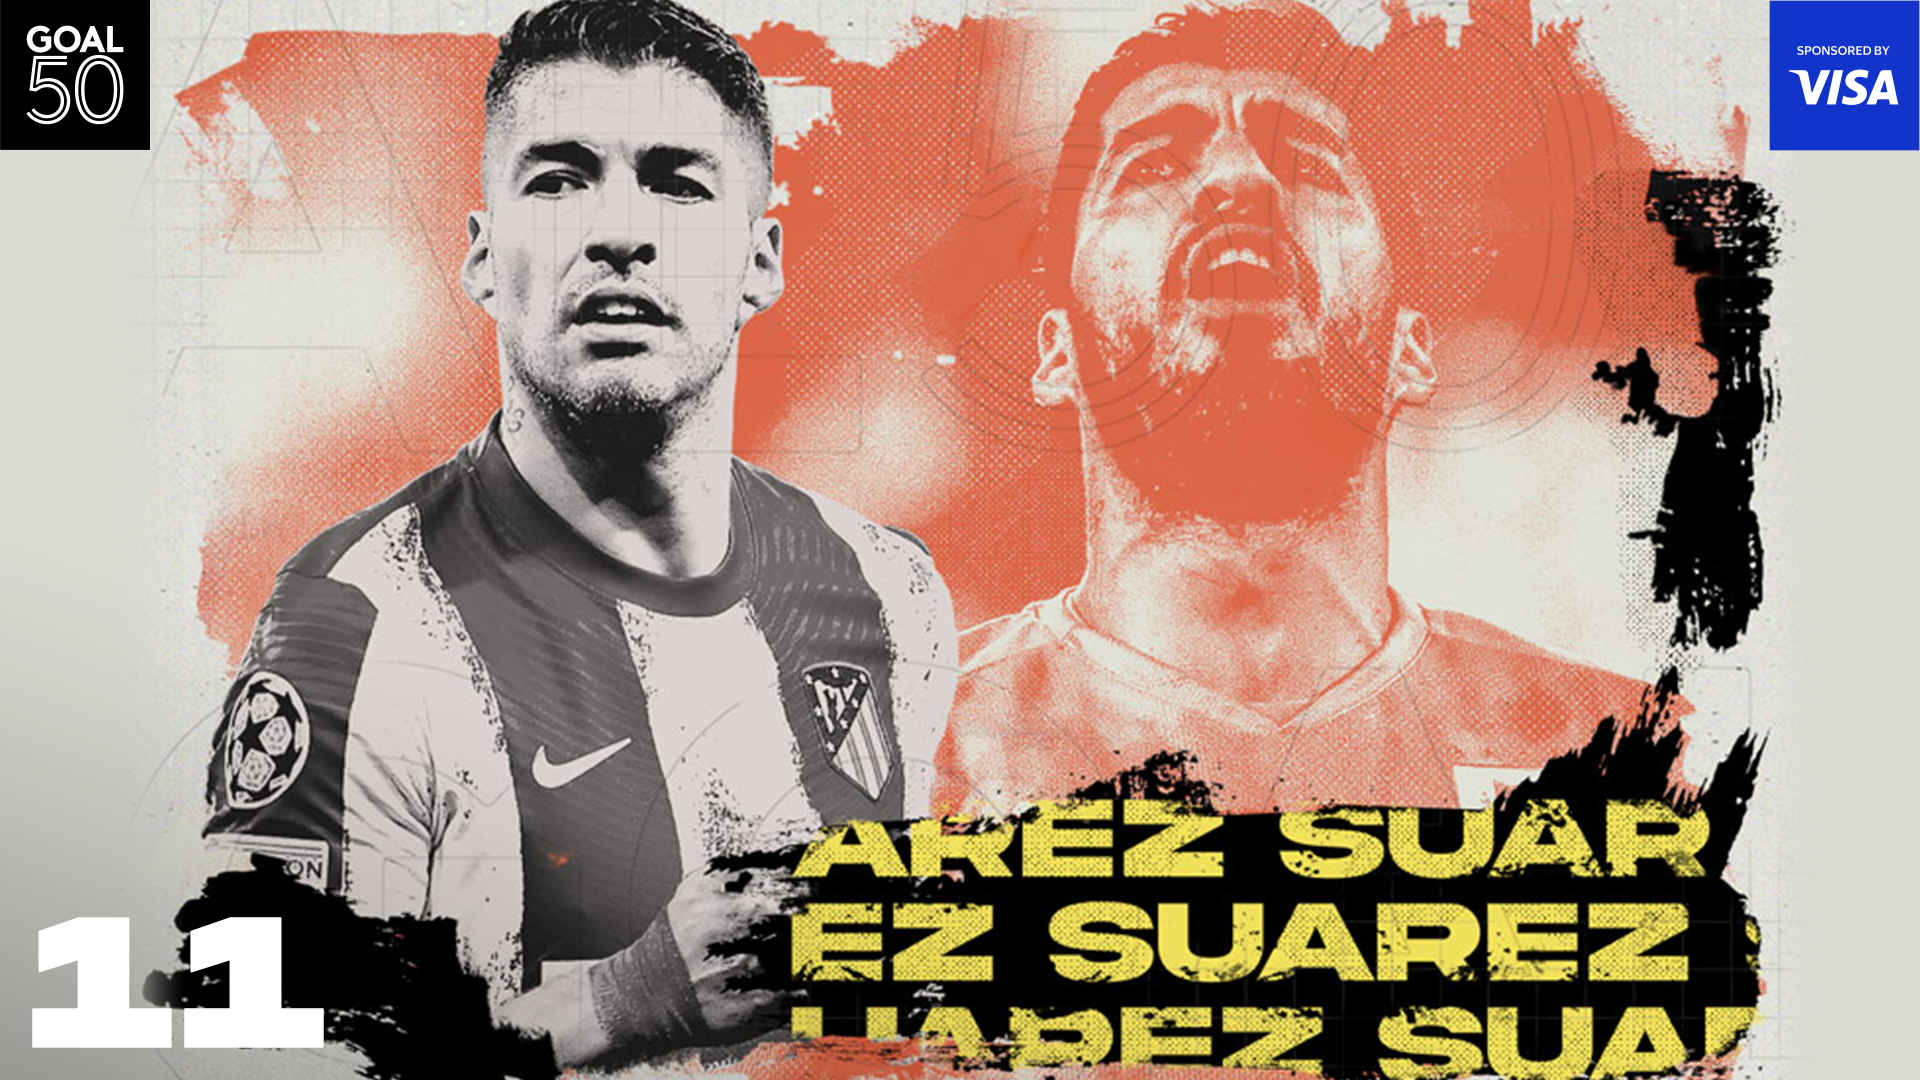 Luis Suarez Goal50 2021